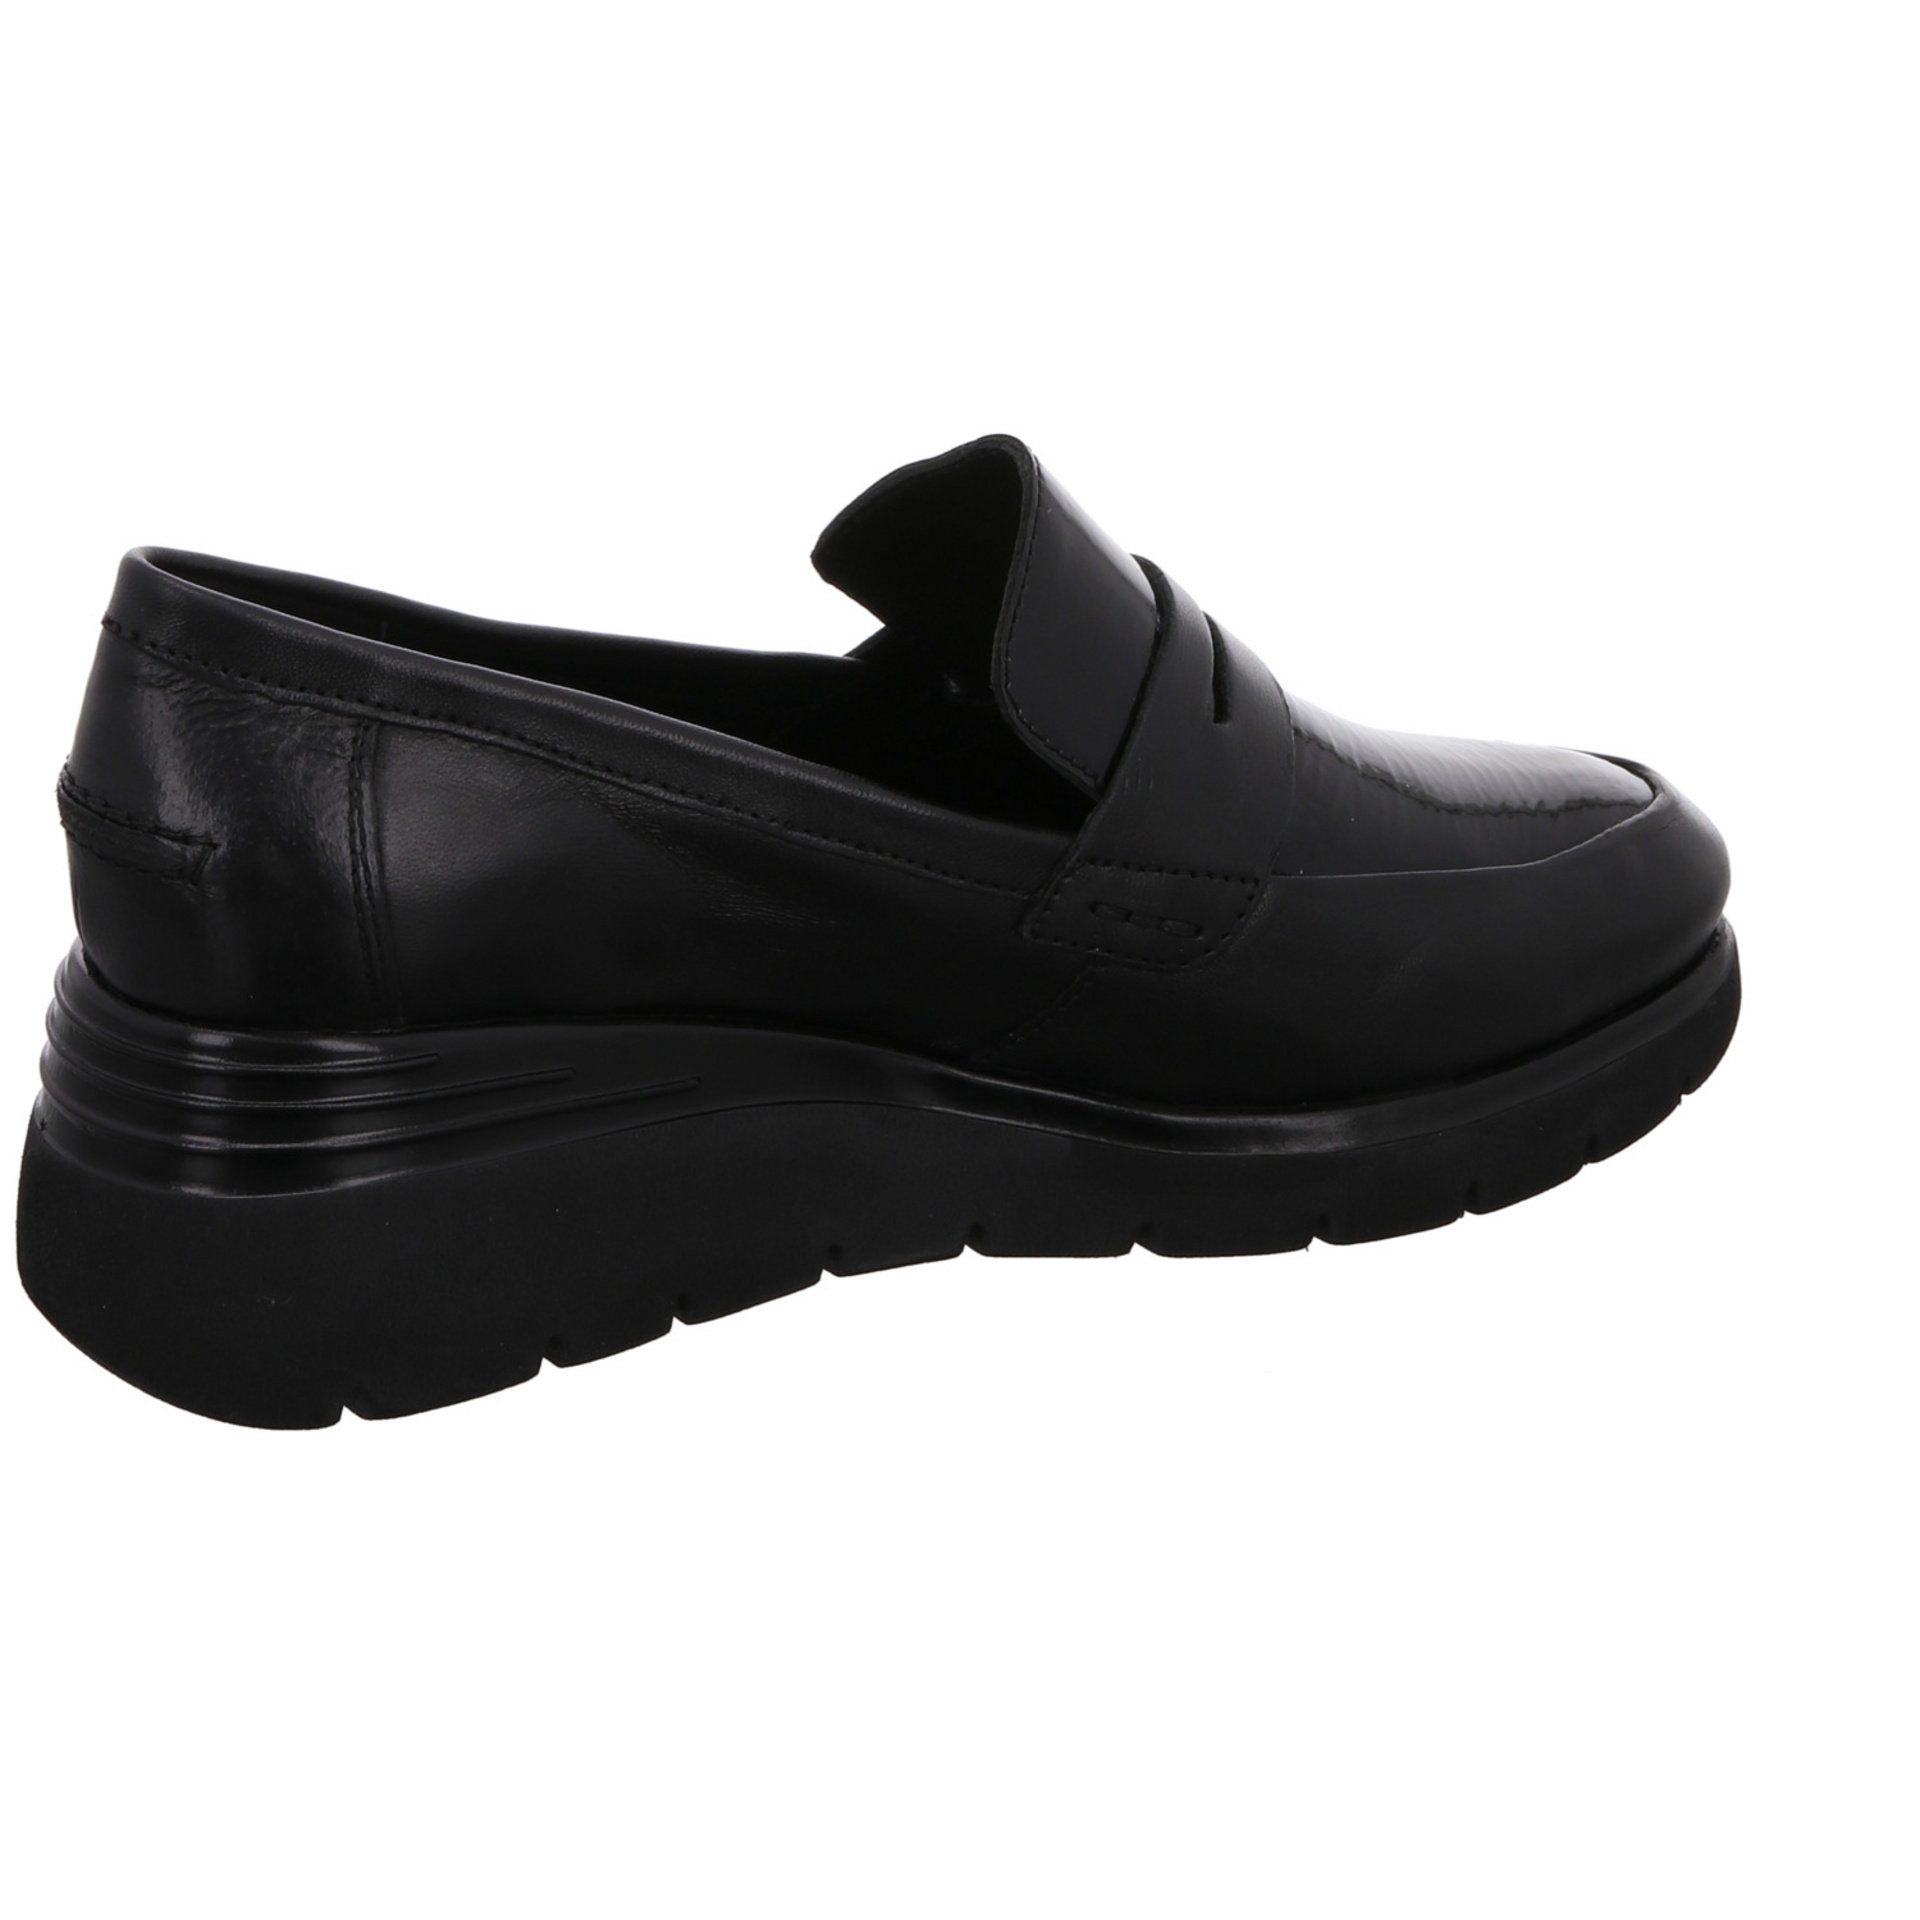 Bari Slipper schwarz Lederkombination Damen Schuhe Slipper Ara 046959 Slipper